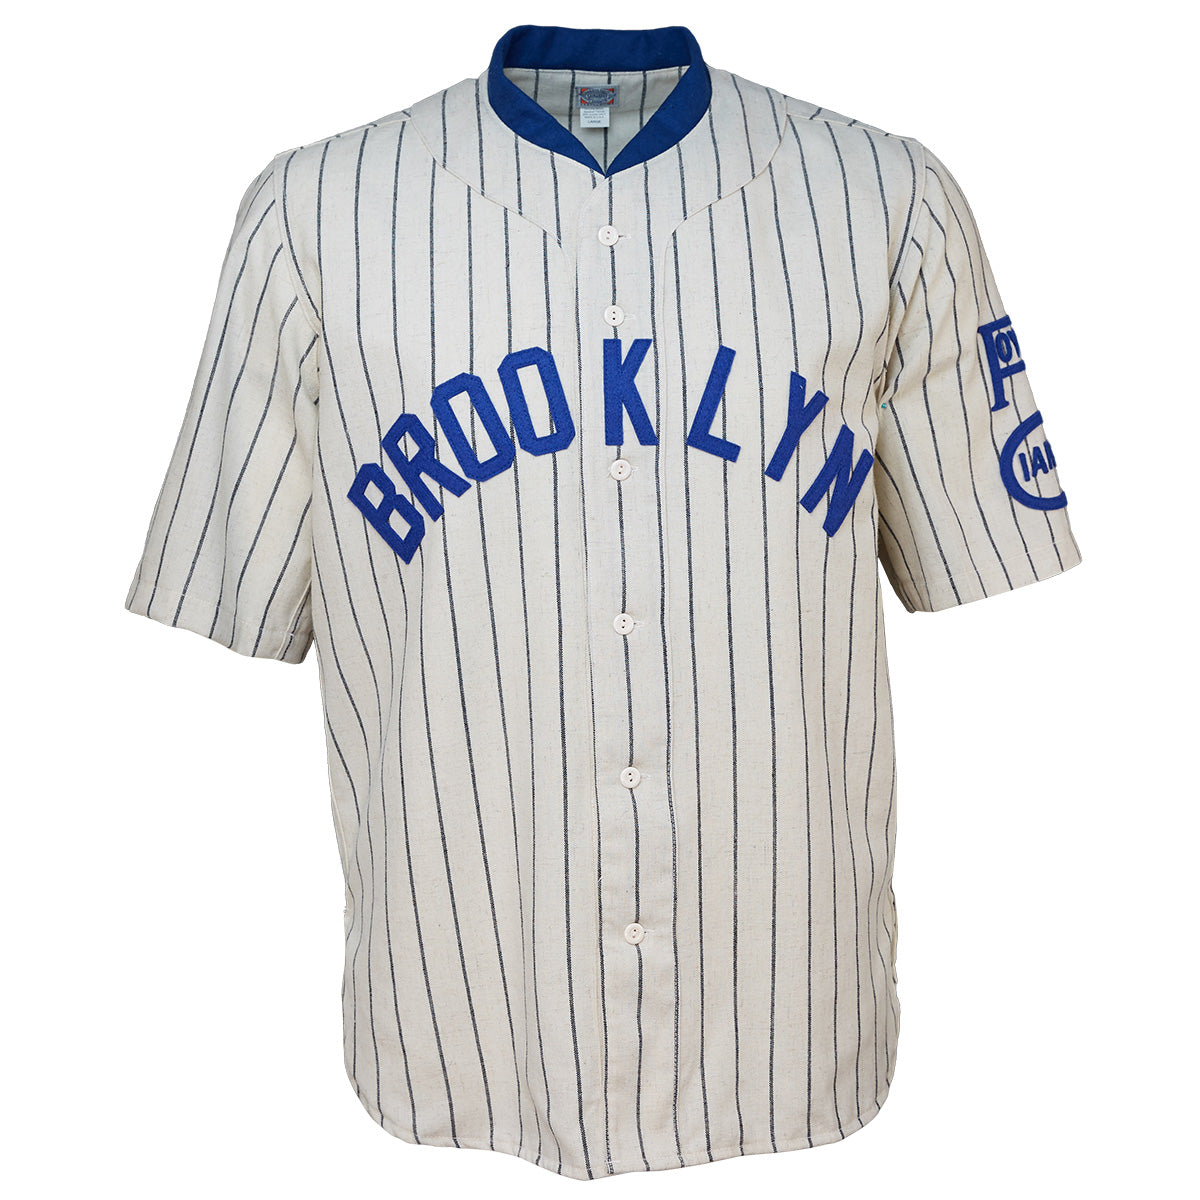 Brooklyn Royal Giants 1925 Home Jersey